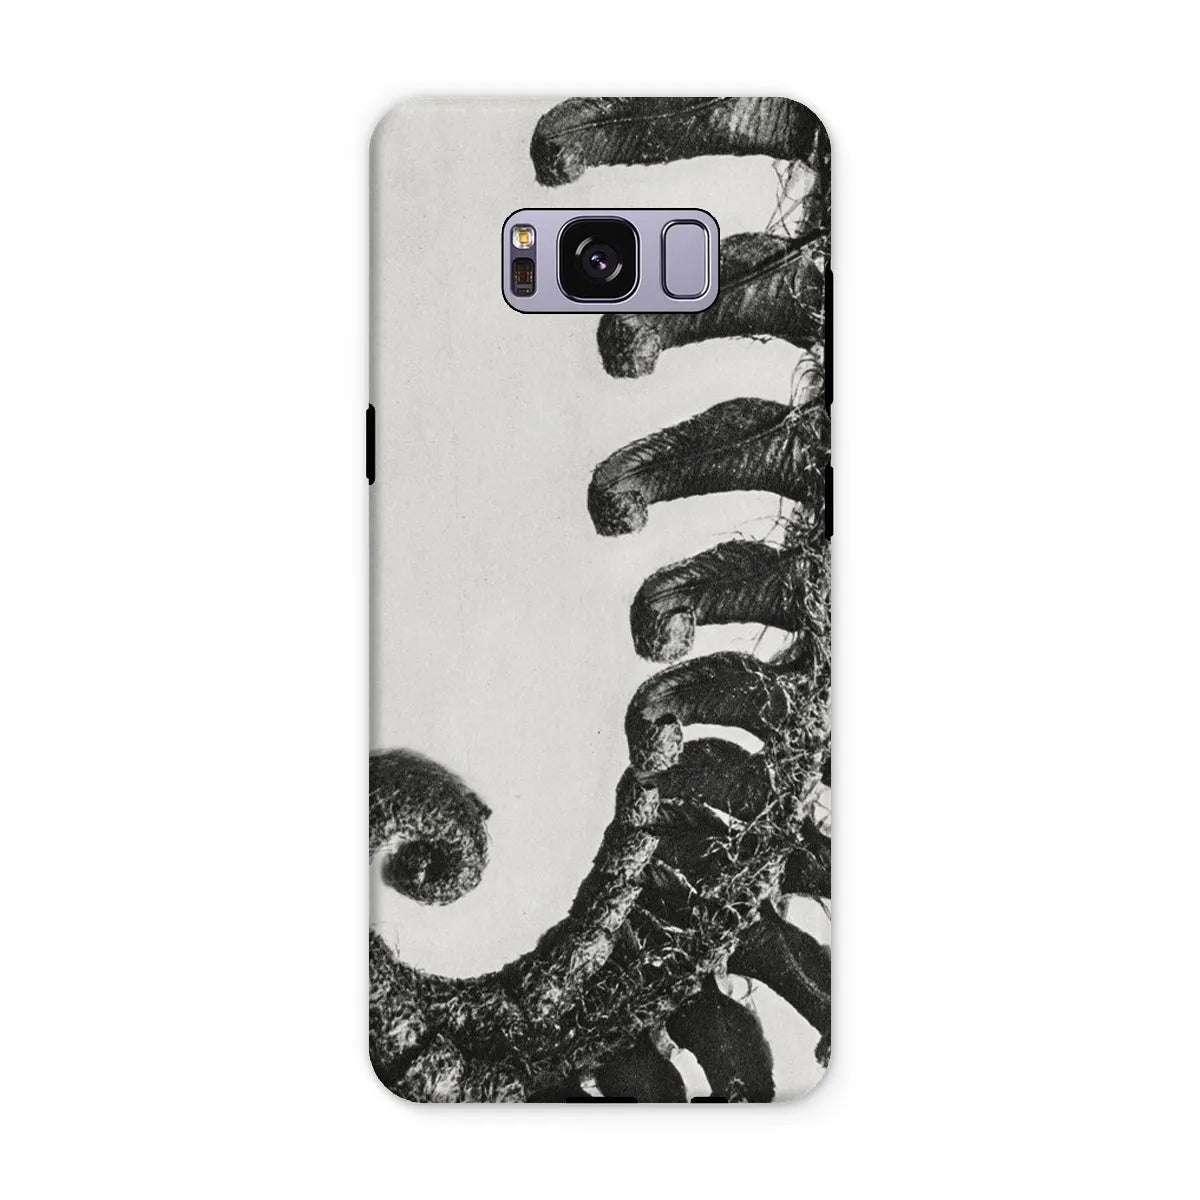 Polystichum Munitum (prickly Shield–fern) By Karl Blossfeldt Tough Phone Case - Samsung Galaxy S8 Plus / Matte